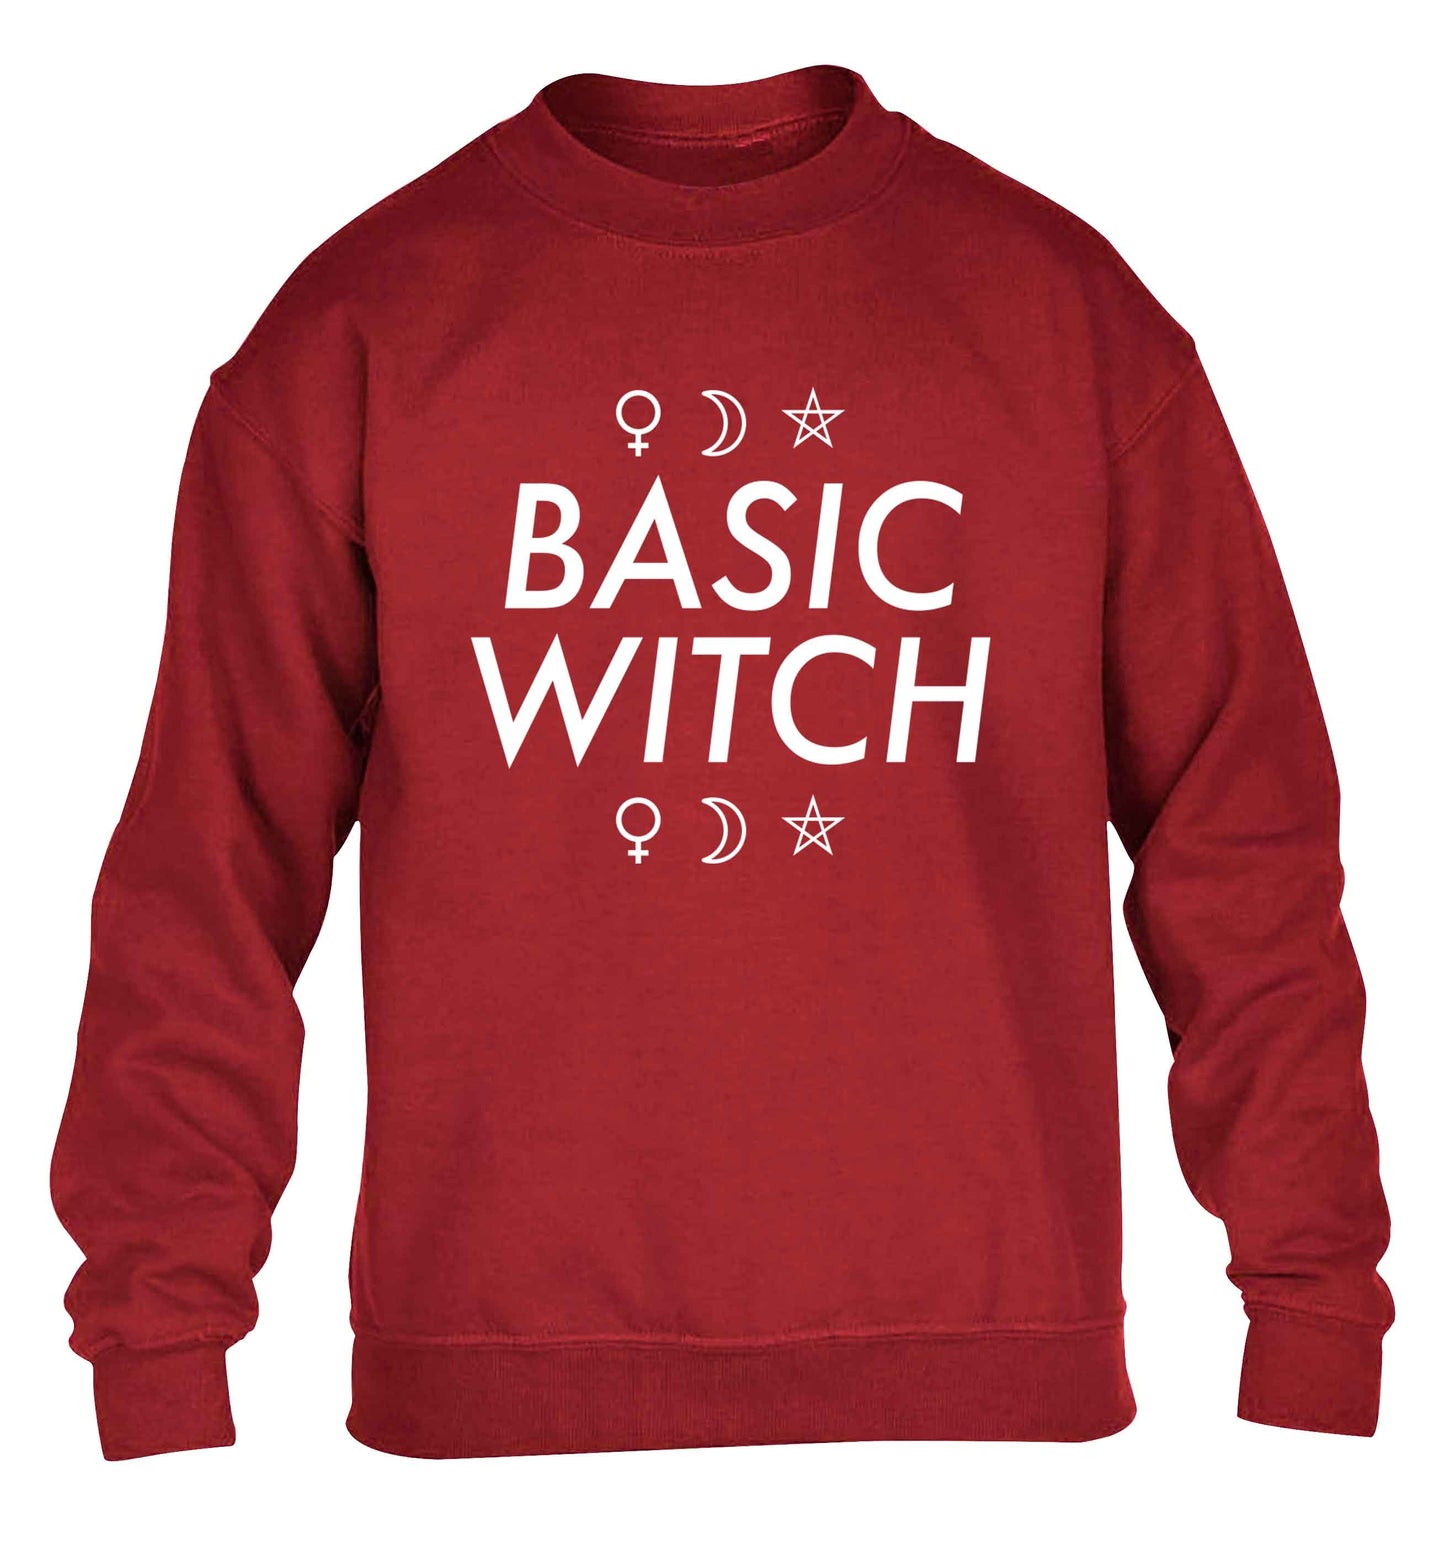 Basic witch 1 children's grey sweater 12-13 Years